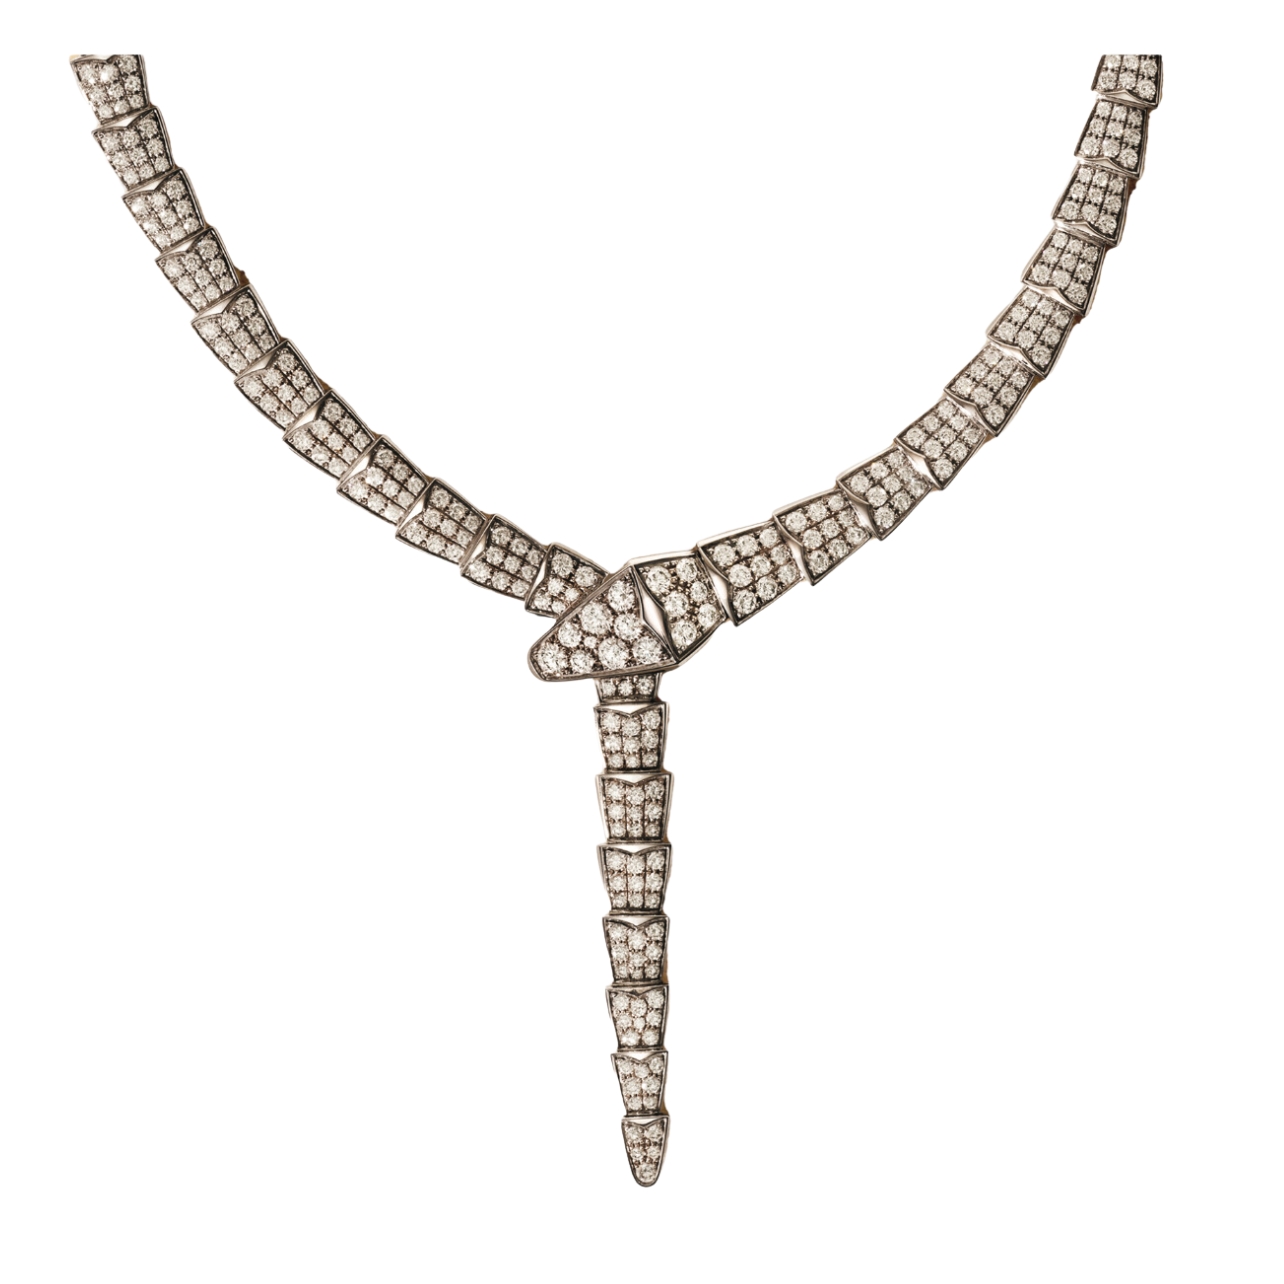 Bulgari serpenti diamond necklace